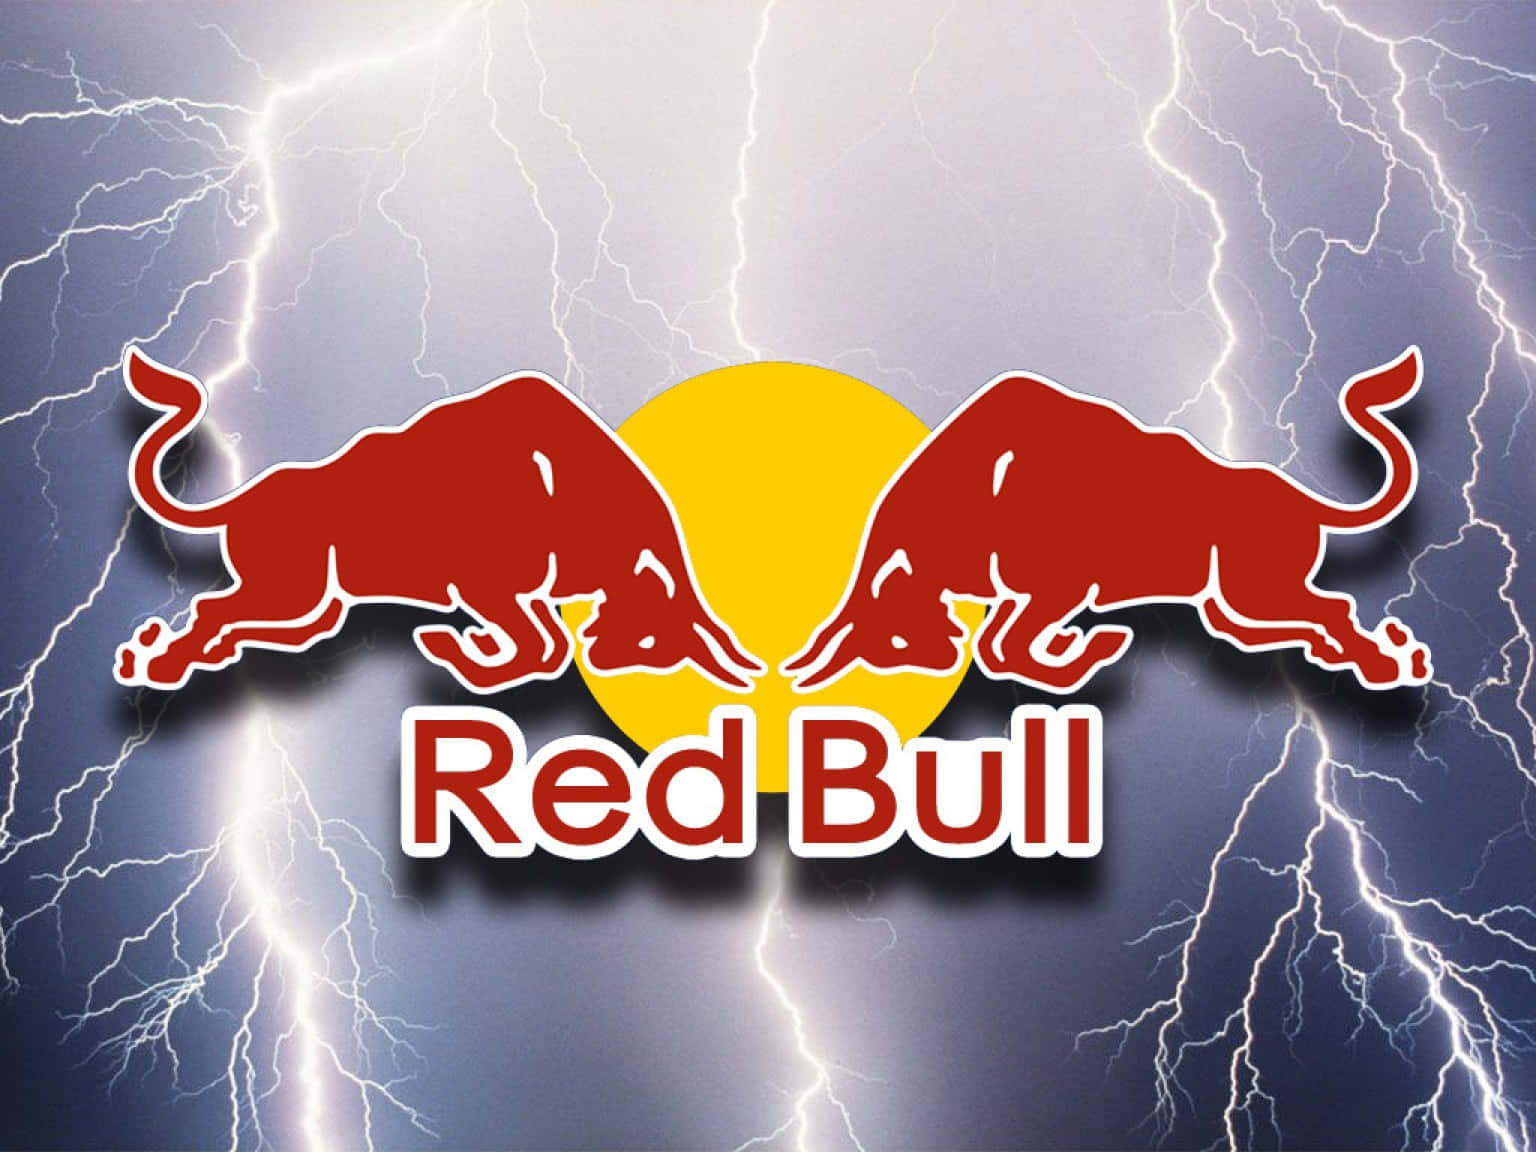 Unaintensa Esplosione Di Energia - Red Bull!